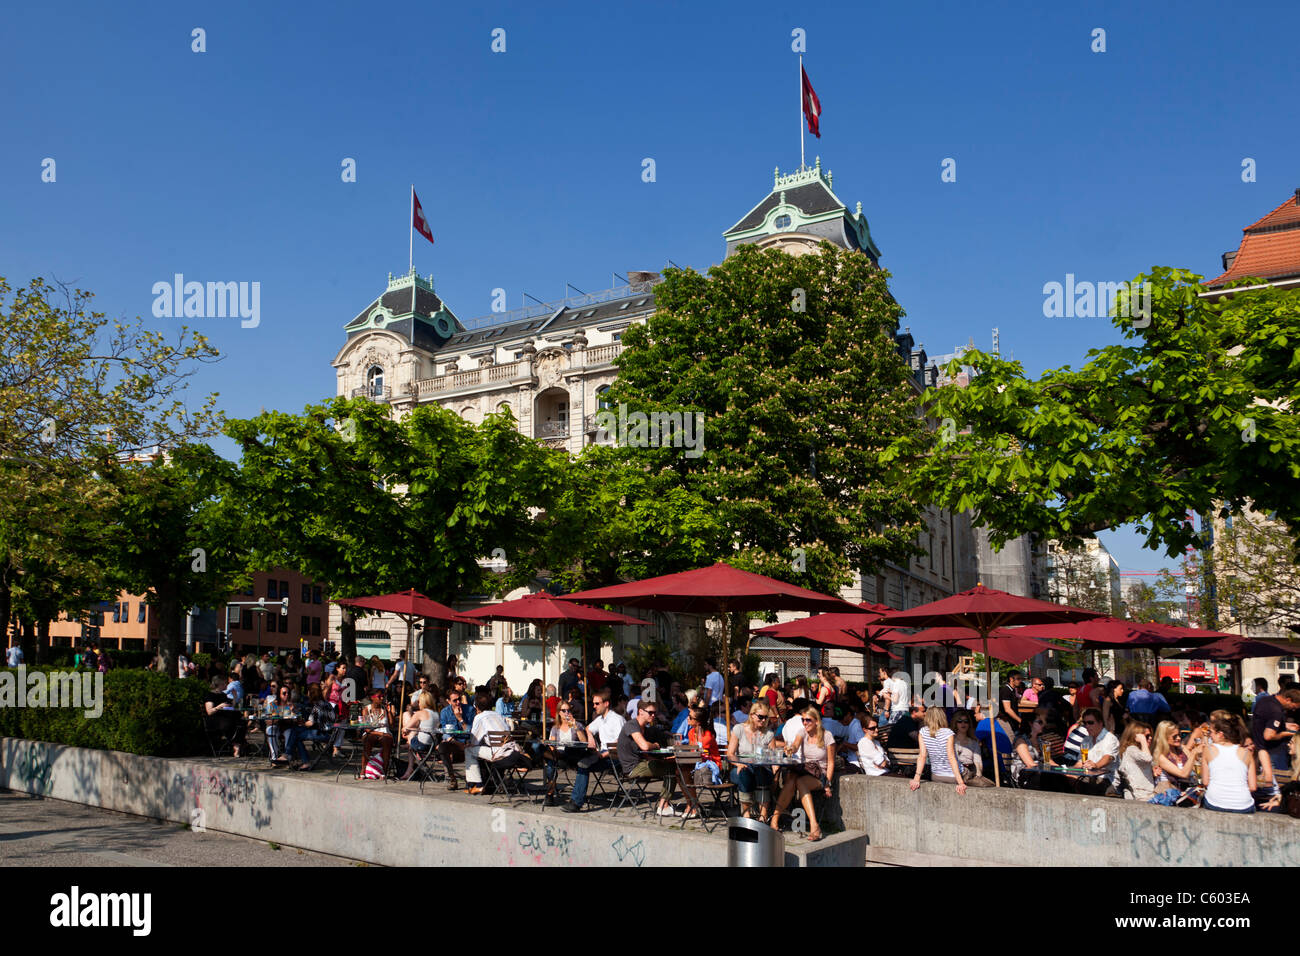 Switzerland Zurich, lake promenade , people , Pumpy bar, street cafe Stock Photo